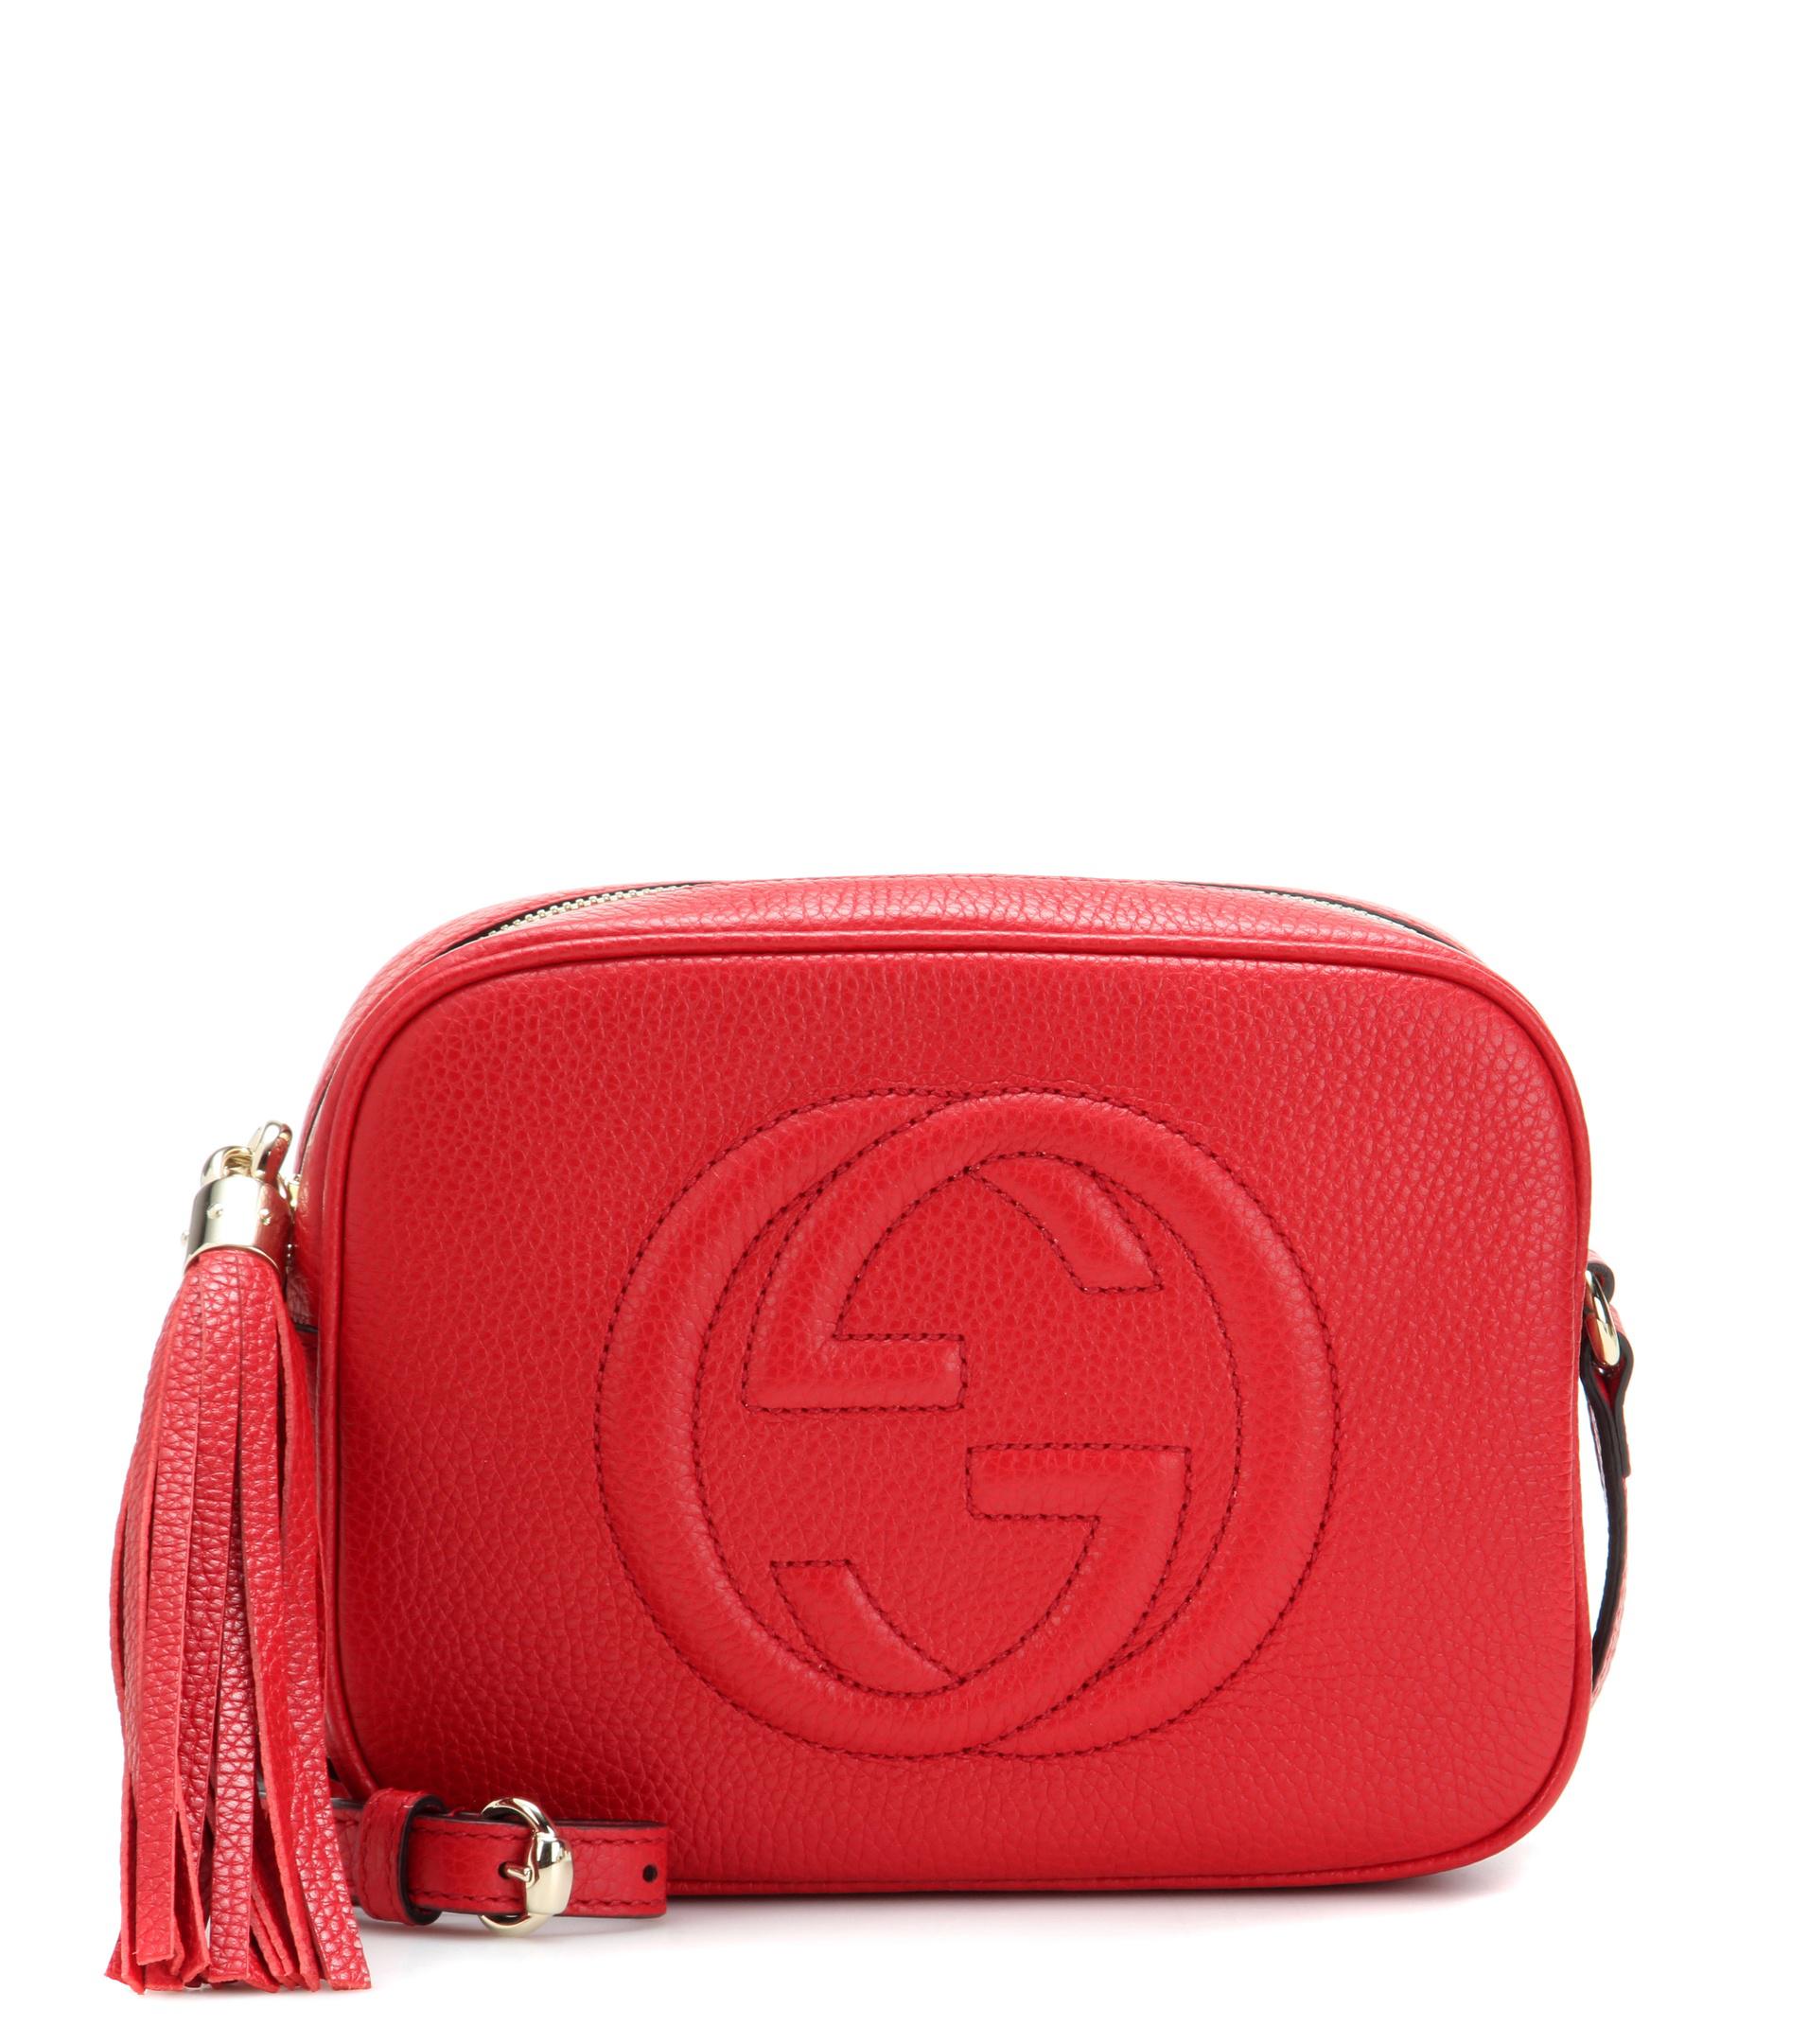 Red Leather Gucci Purse | semashow.com